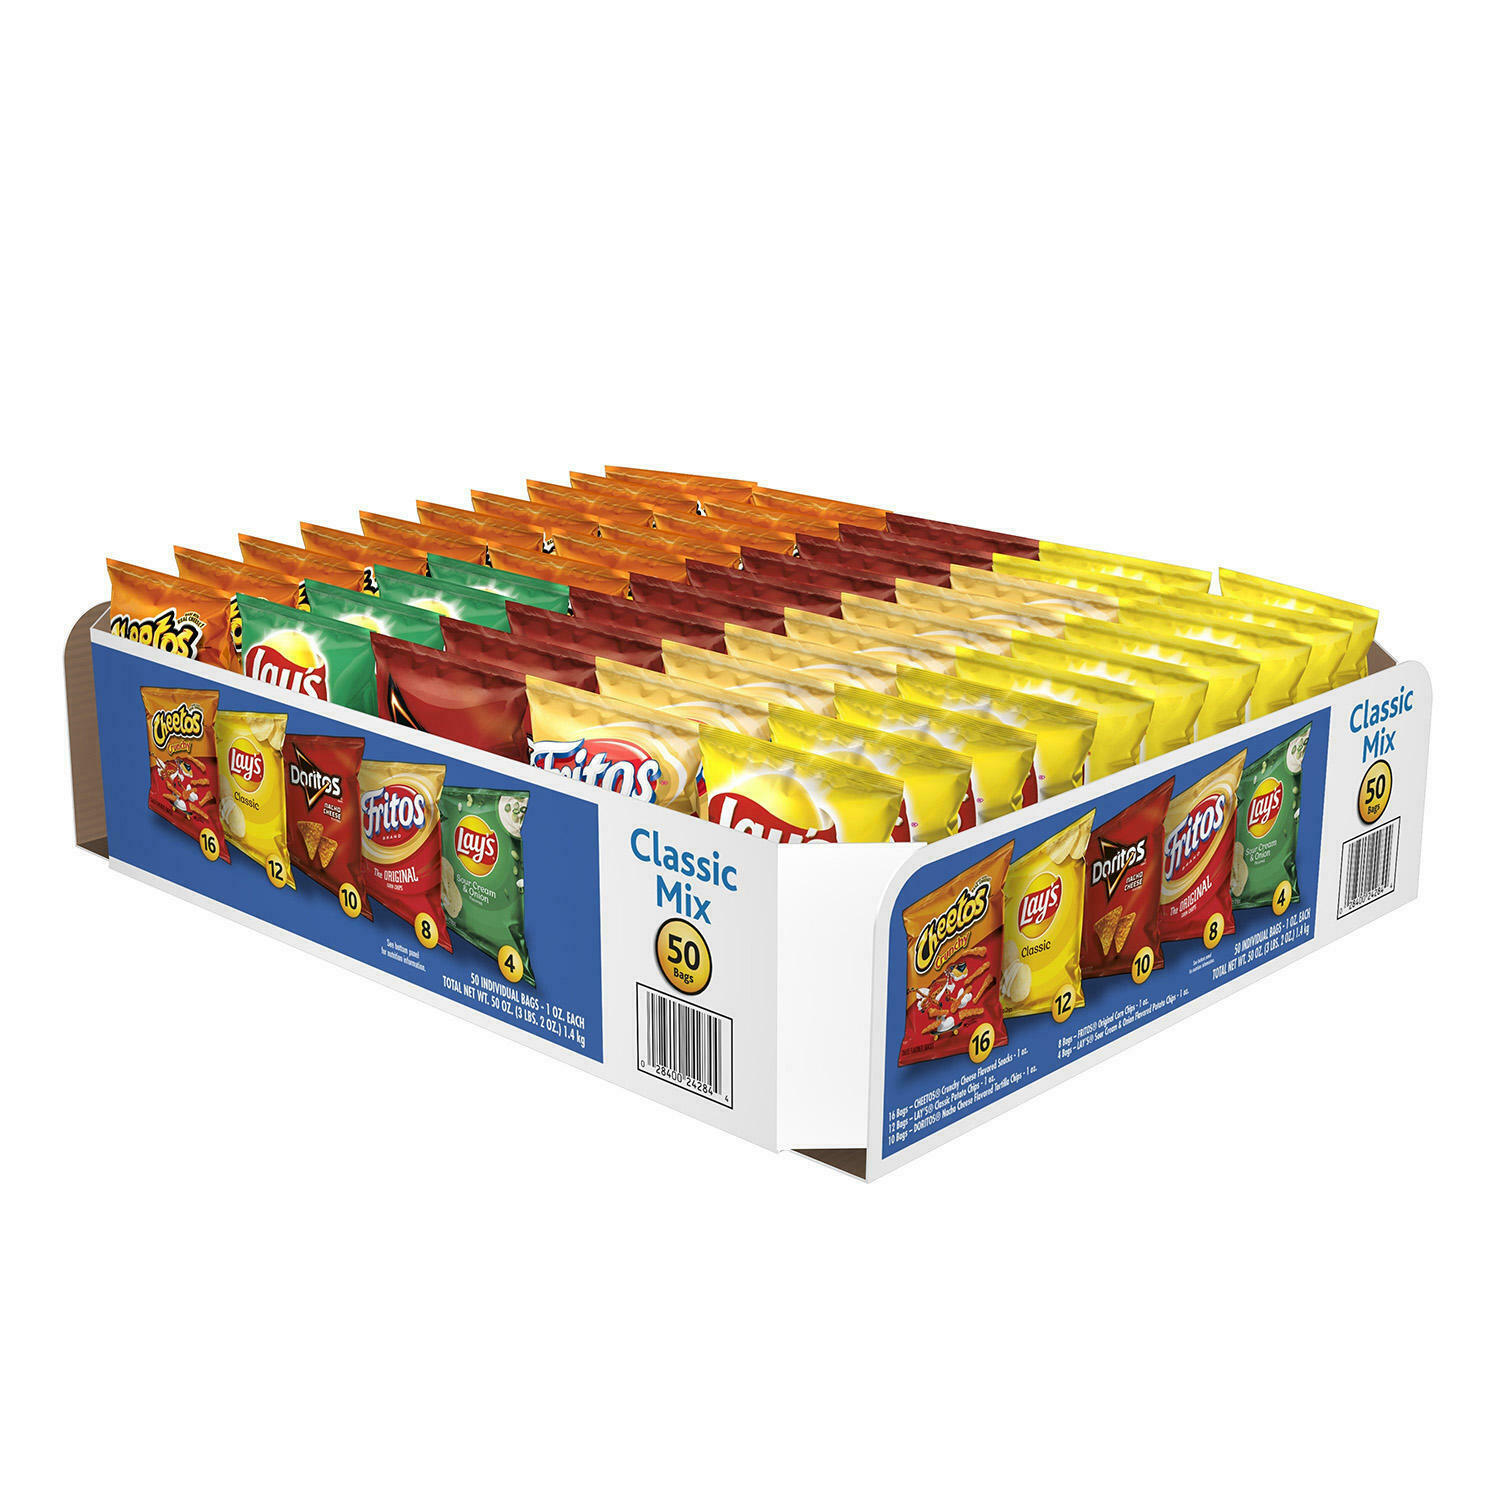 Frito-lay Classic Mix Variety Pack (50 Pk.) Free Shipping